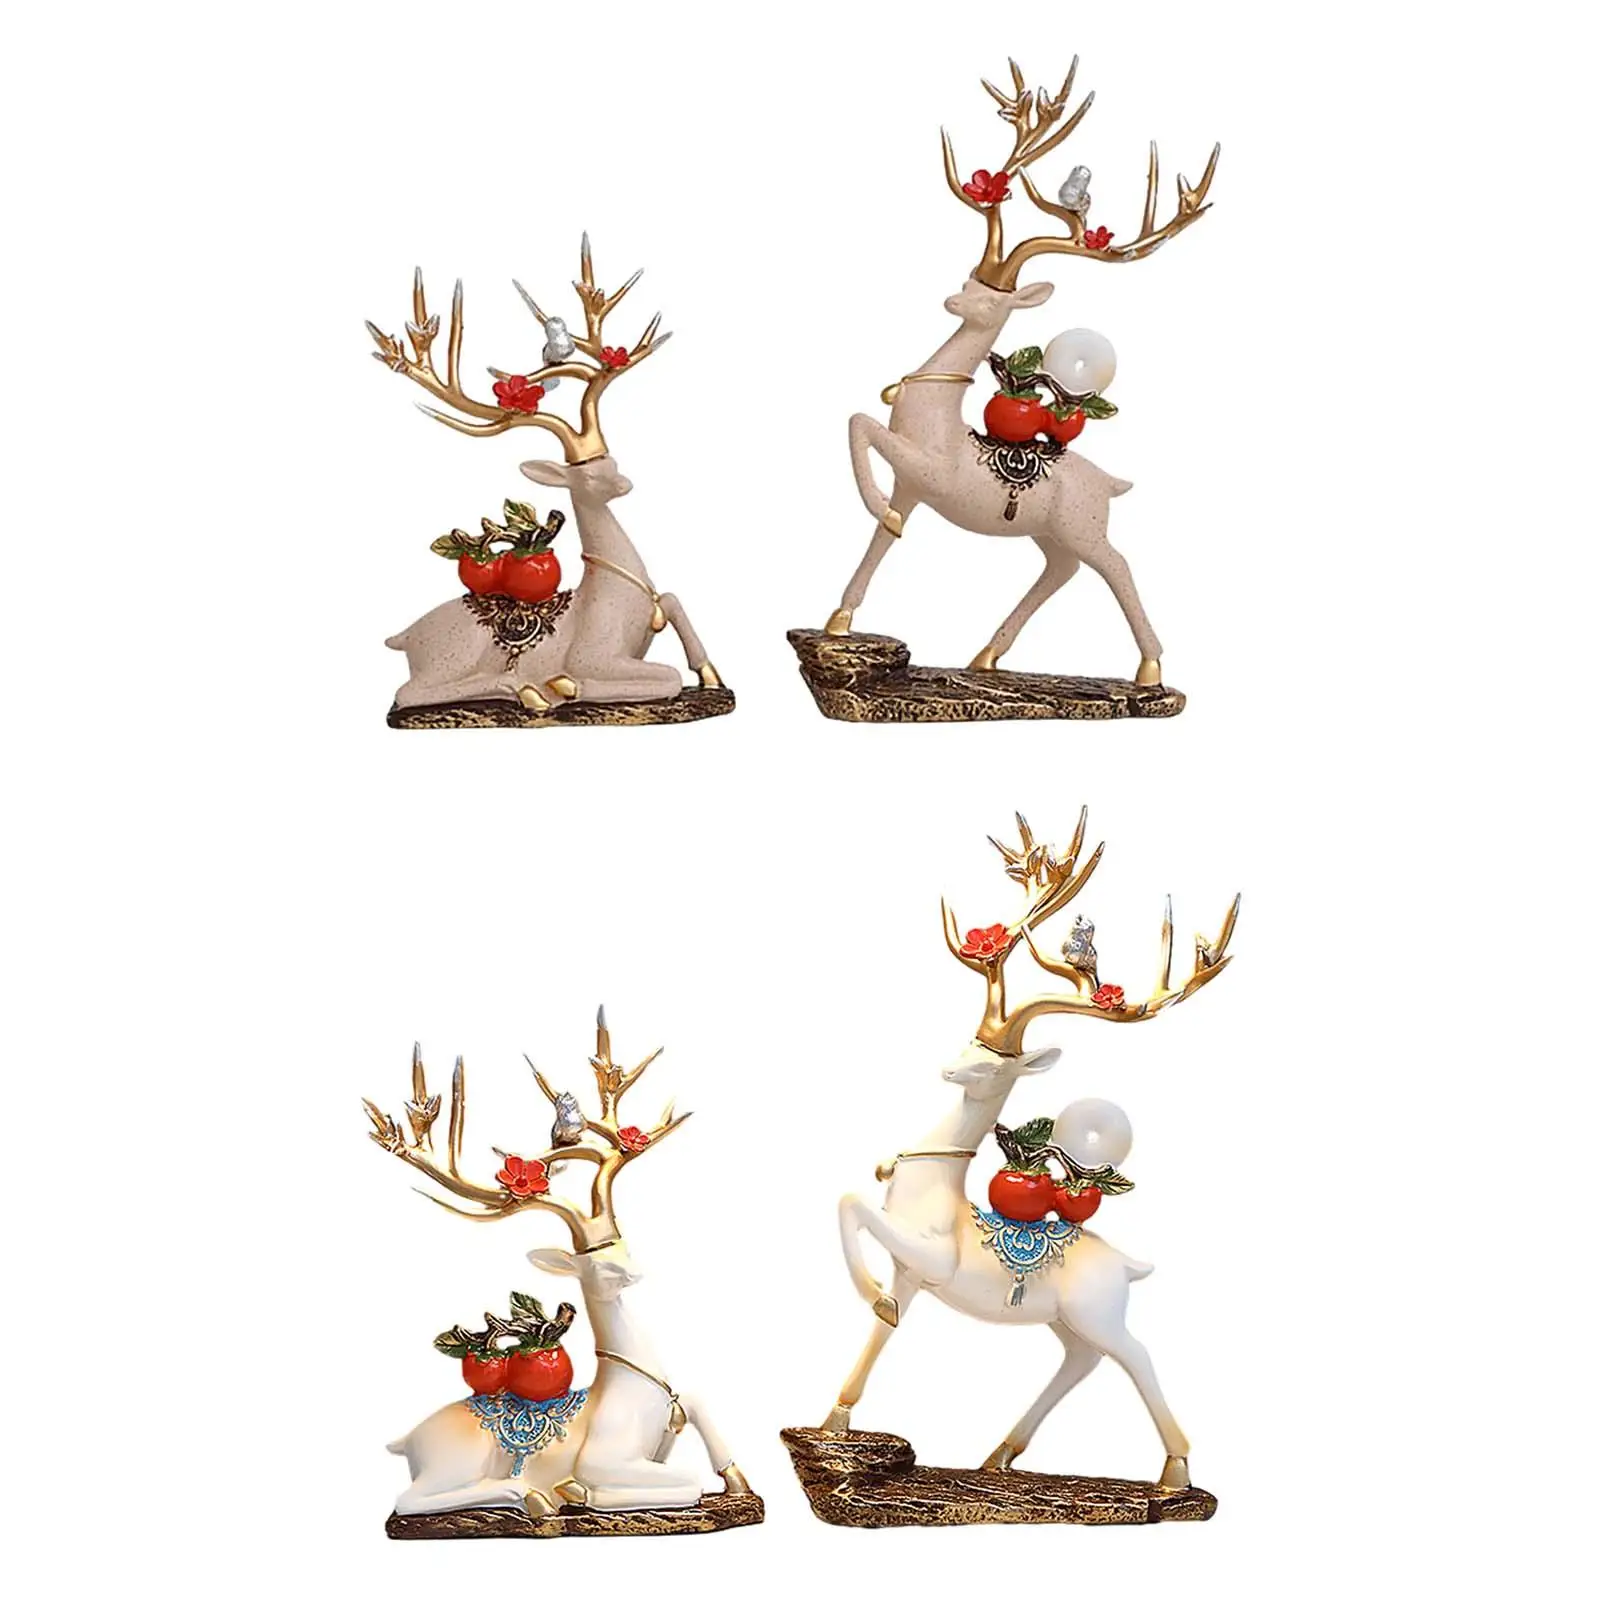 

2x Reindeer Statues Art Figurine Resin Craft Elk Couple Sculpture Decorative for Living Room Tabletop Bookshelf Party Decor